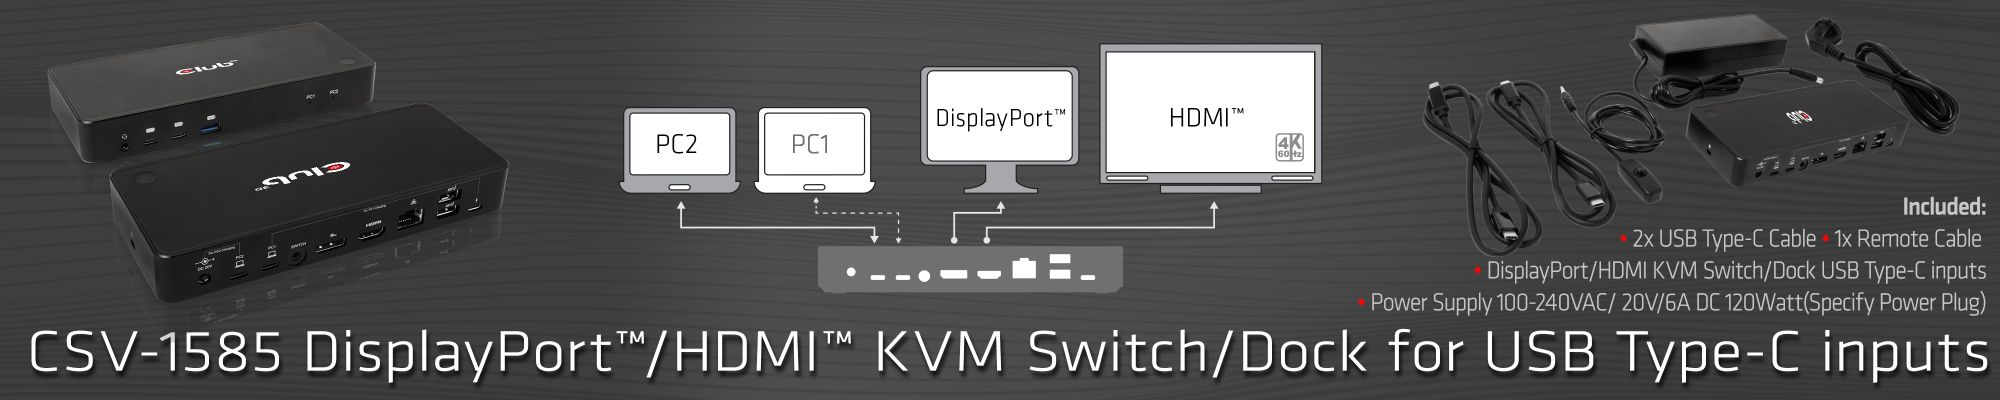 DisplayPort/HDMI KVM Switch/Dock 4K60Hz For USB Type-C inputs